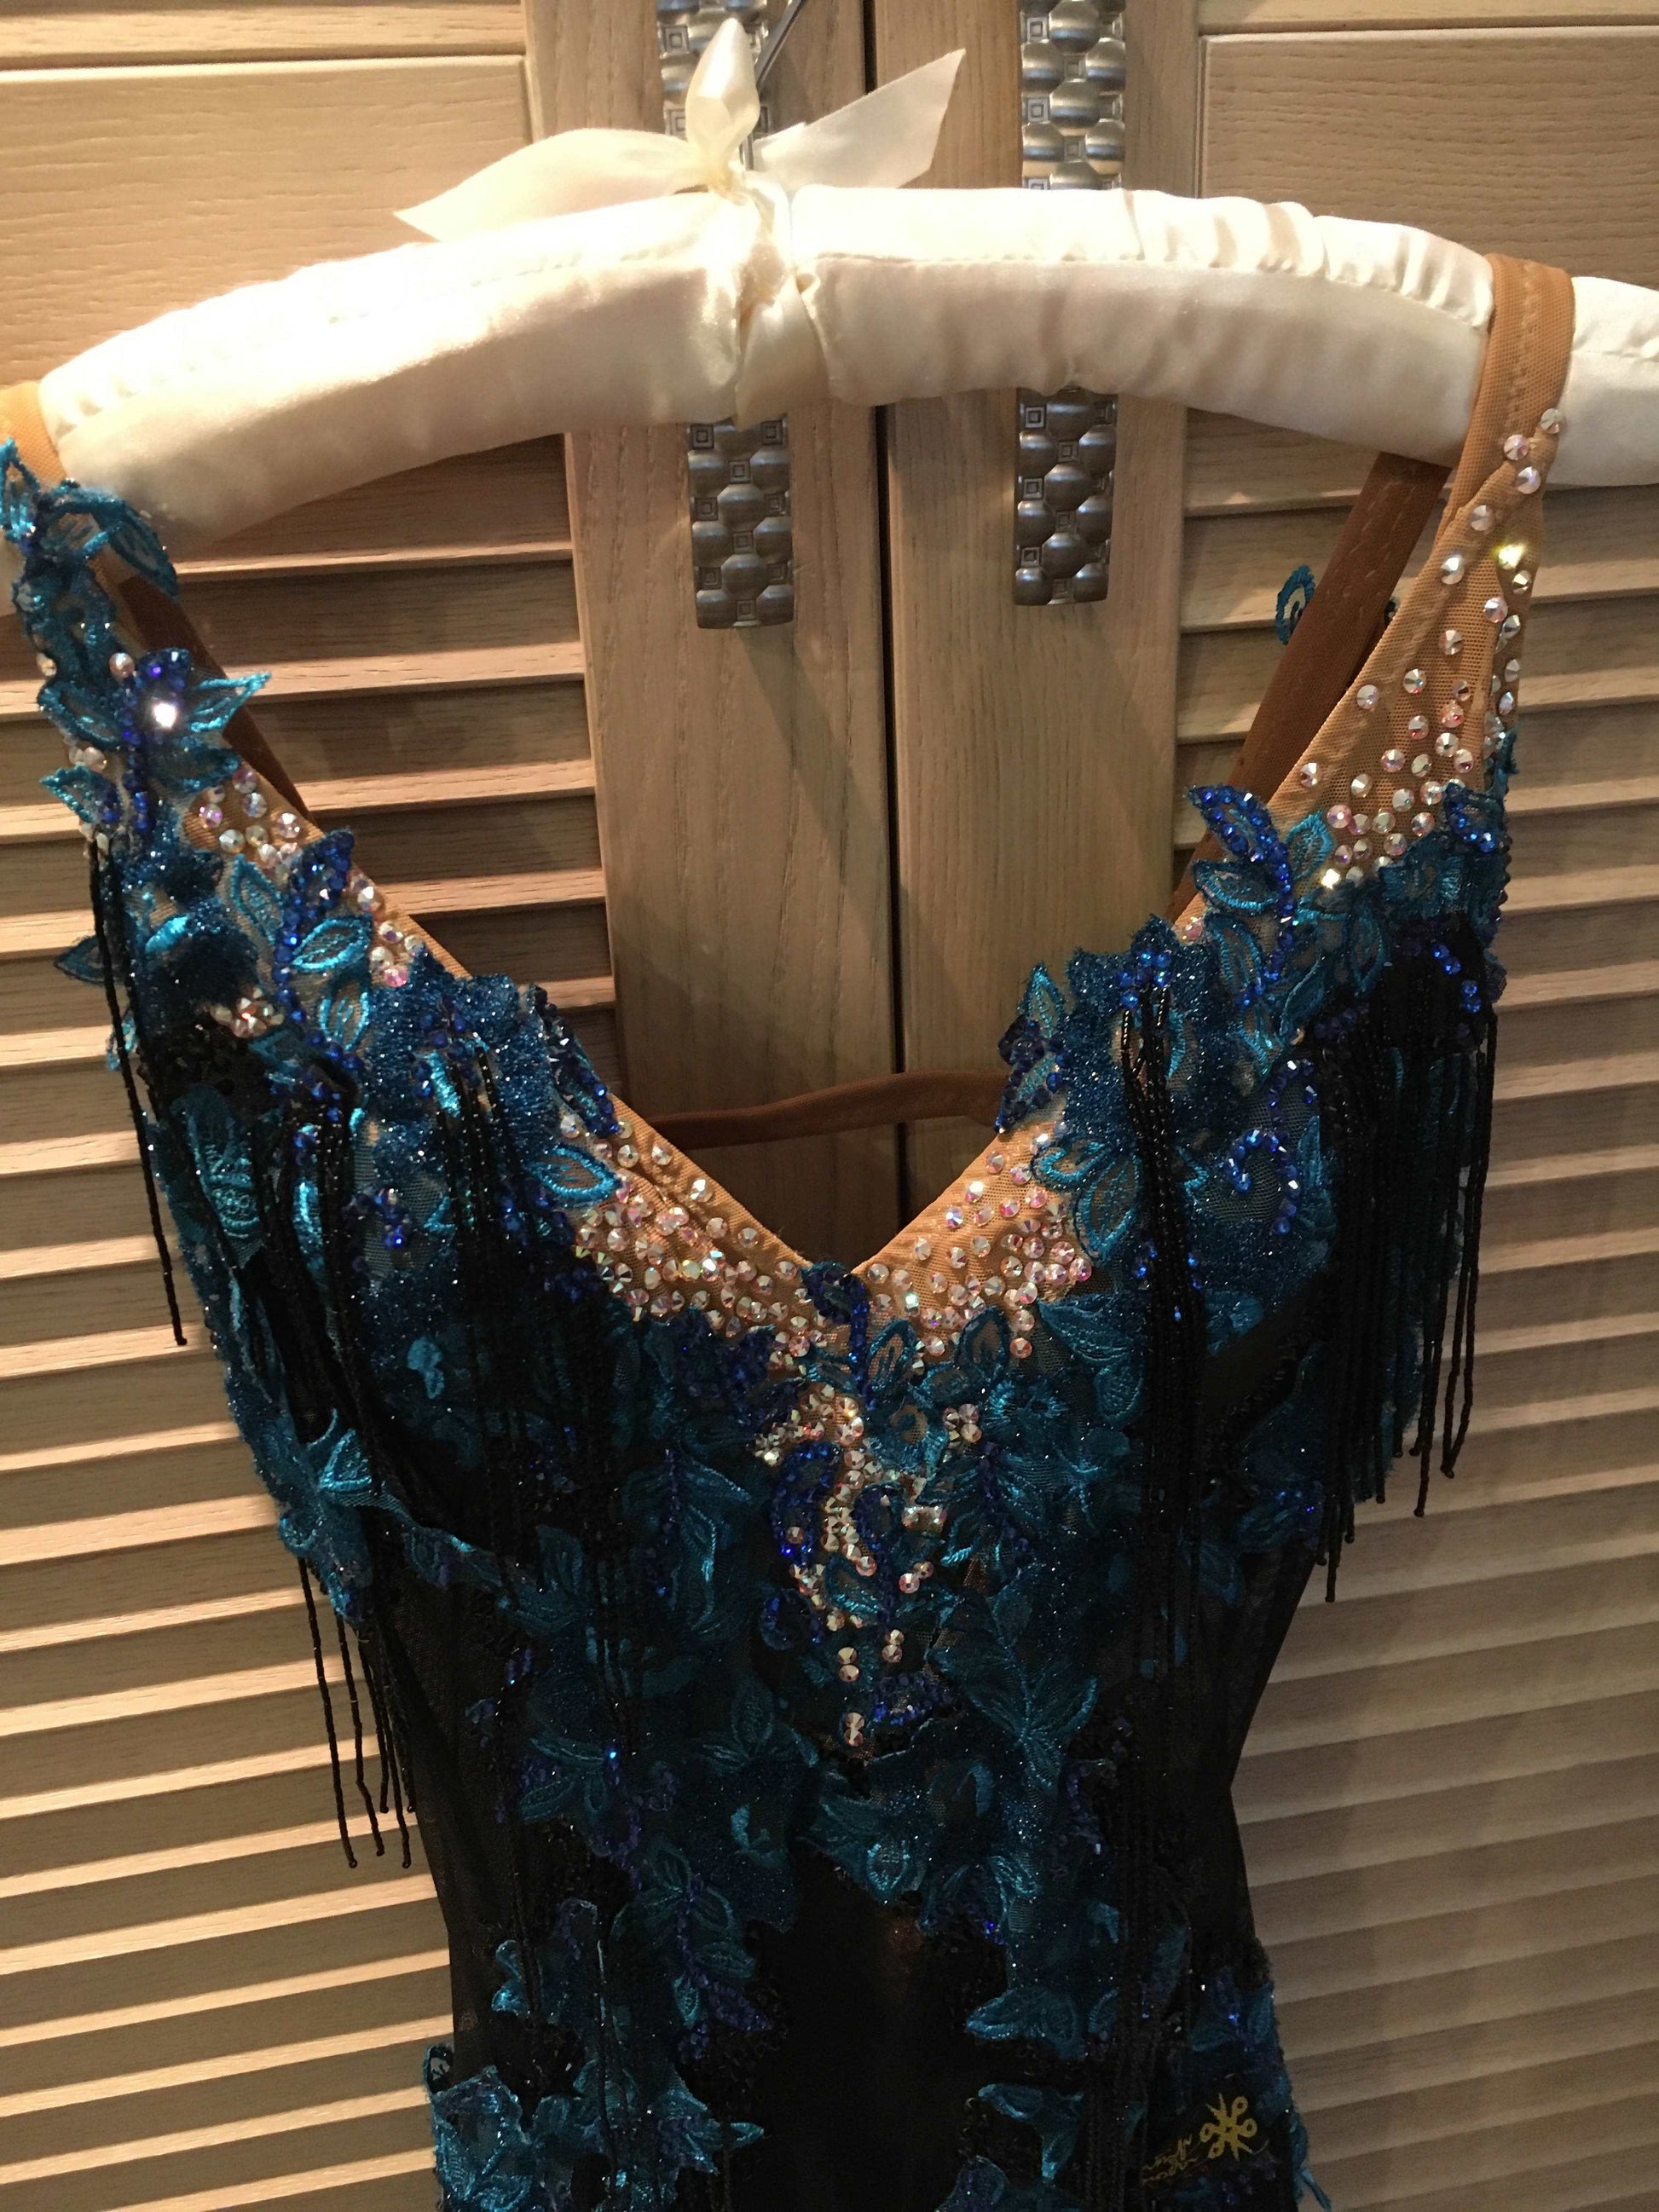 Black Latin Dress with Blue Flowers (ballroom dresses for sale, latin, dancesport, rhythm) - DDressing